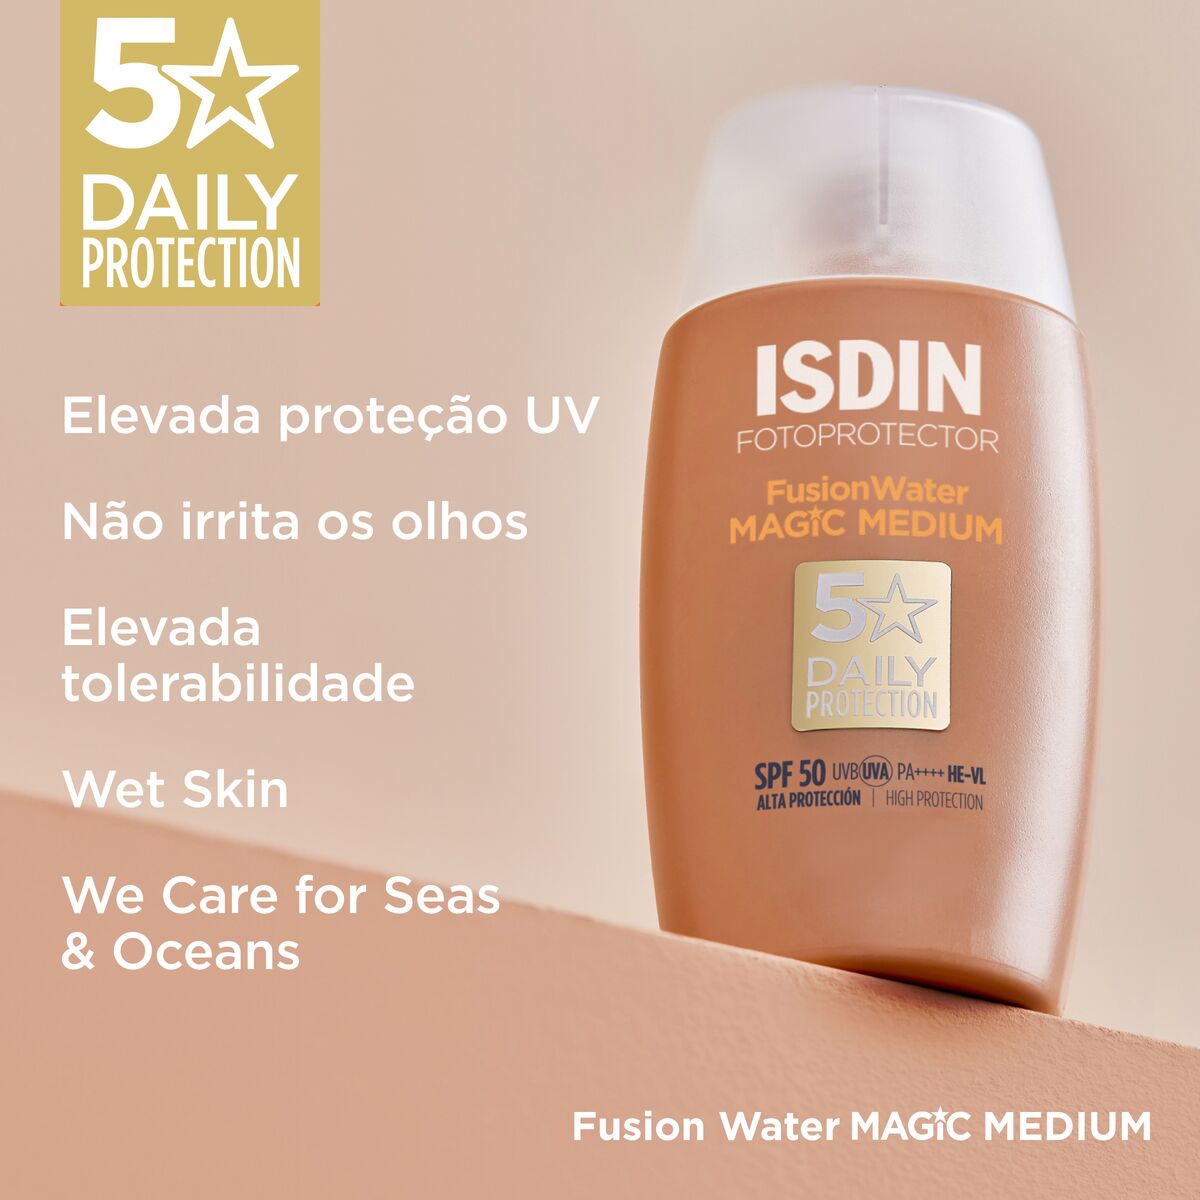 ISDIN Fotoprotetor Fusion Water MAGIC Medium SPF50